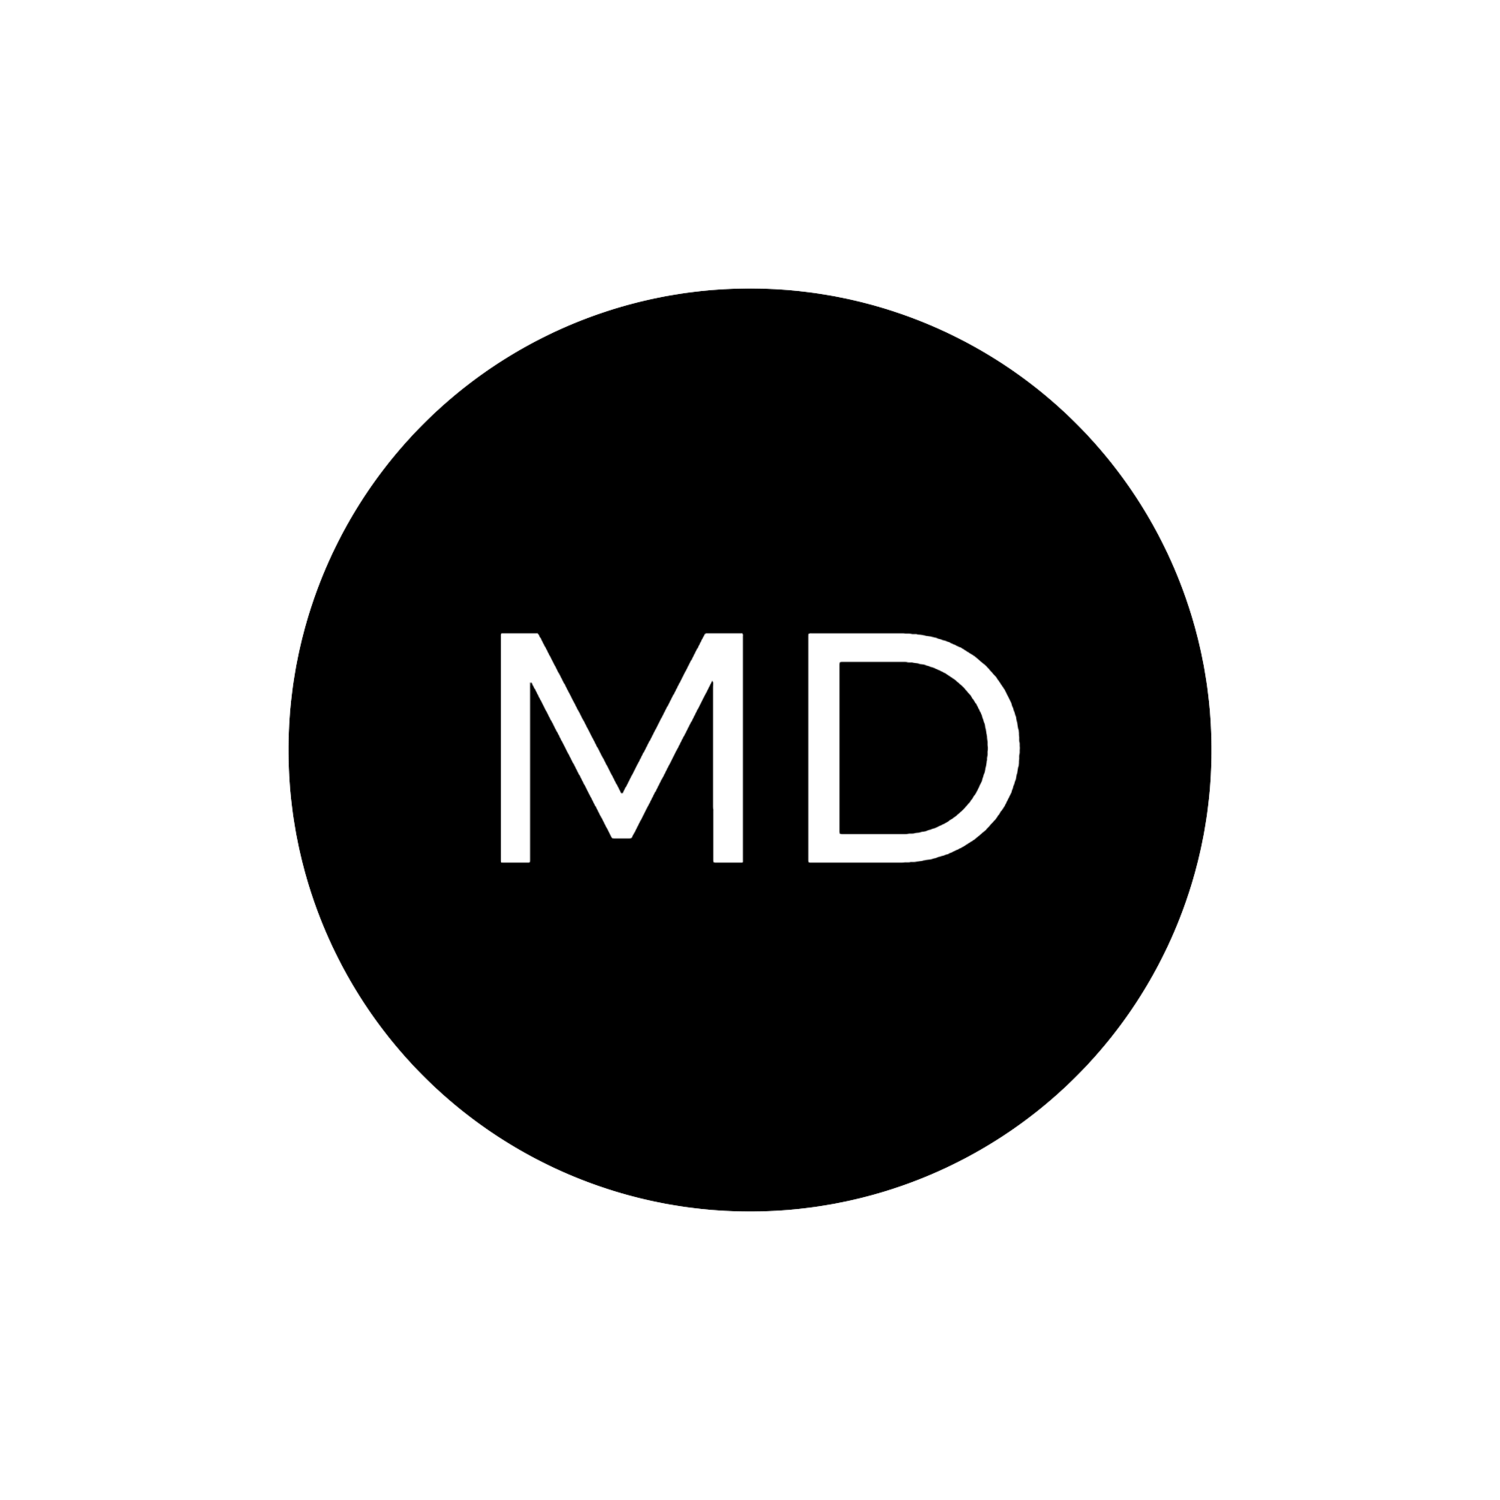 MD Circle Logo - MD